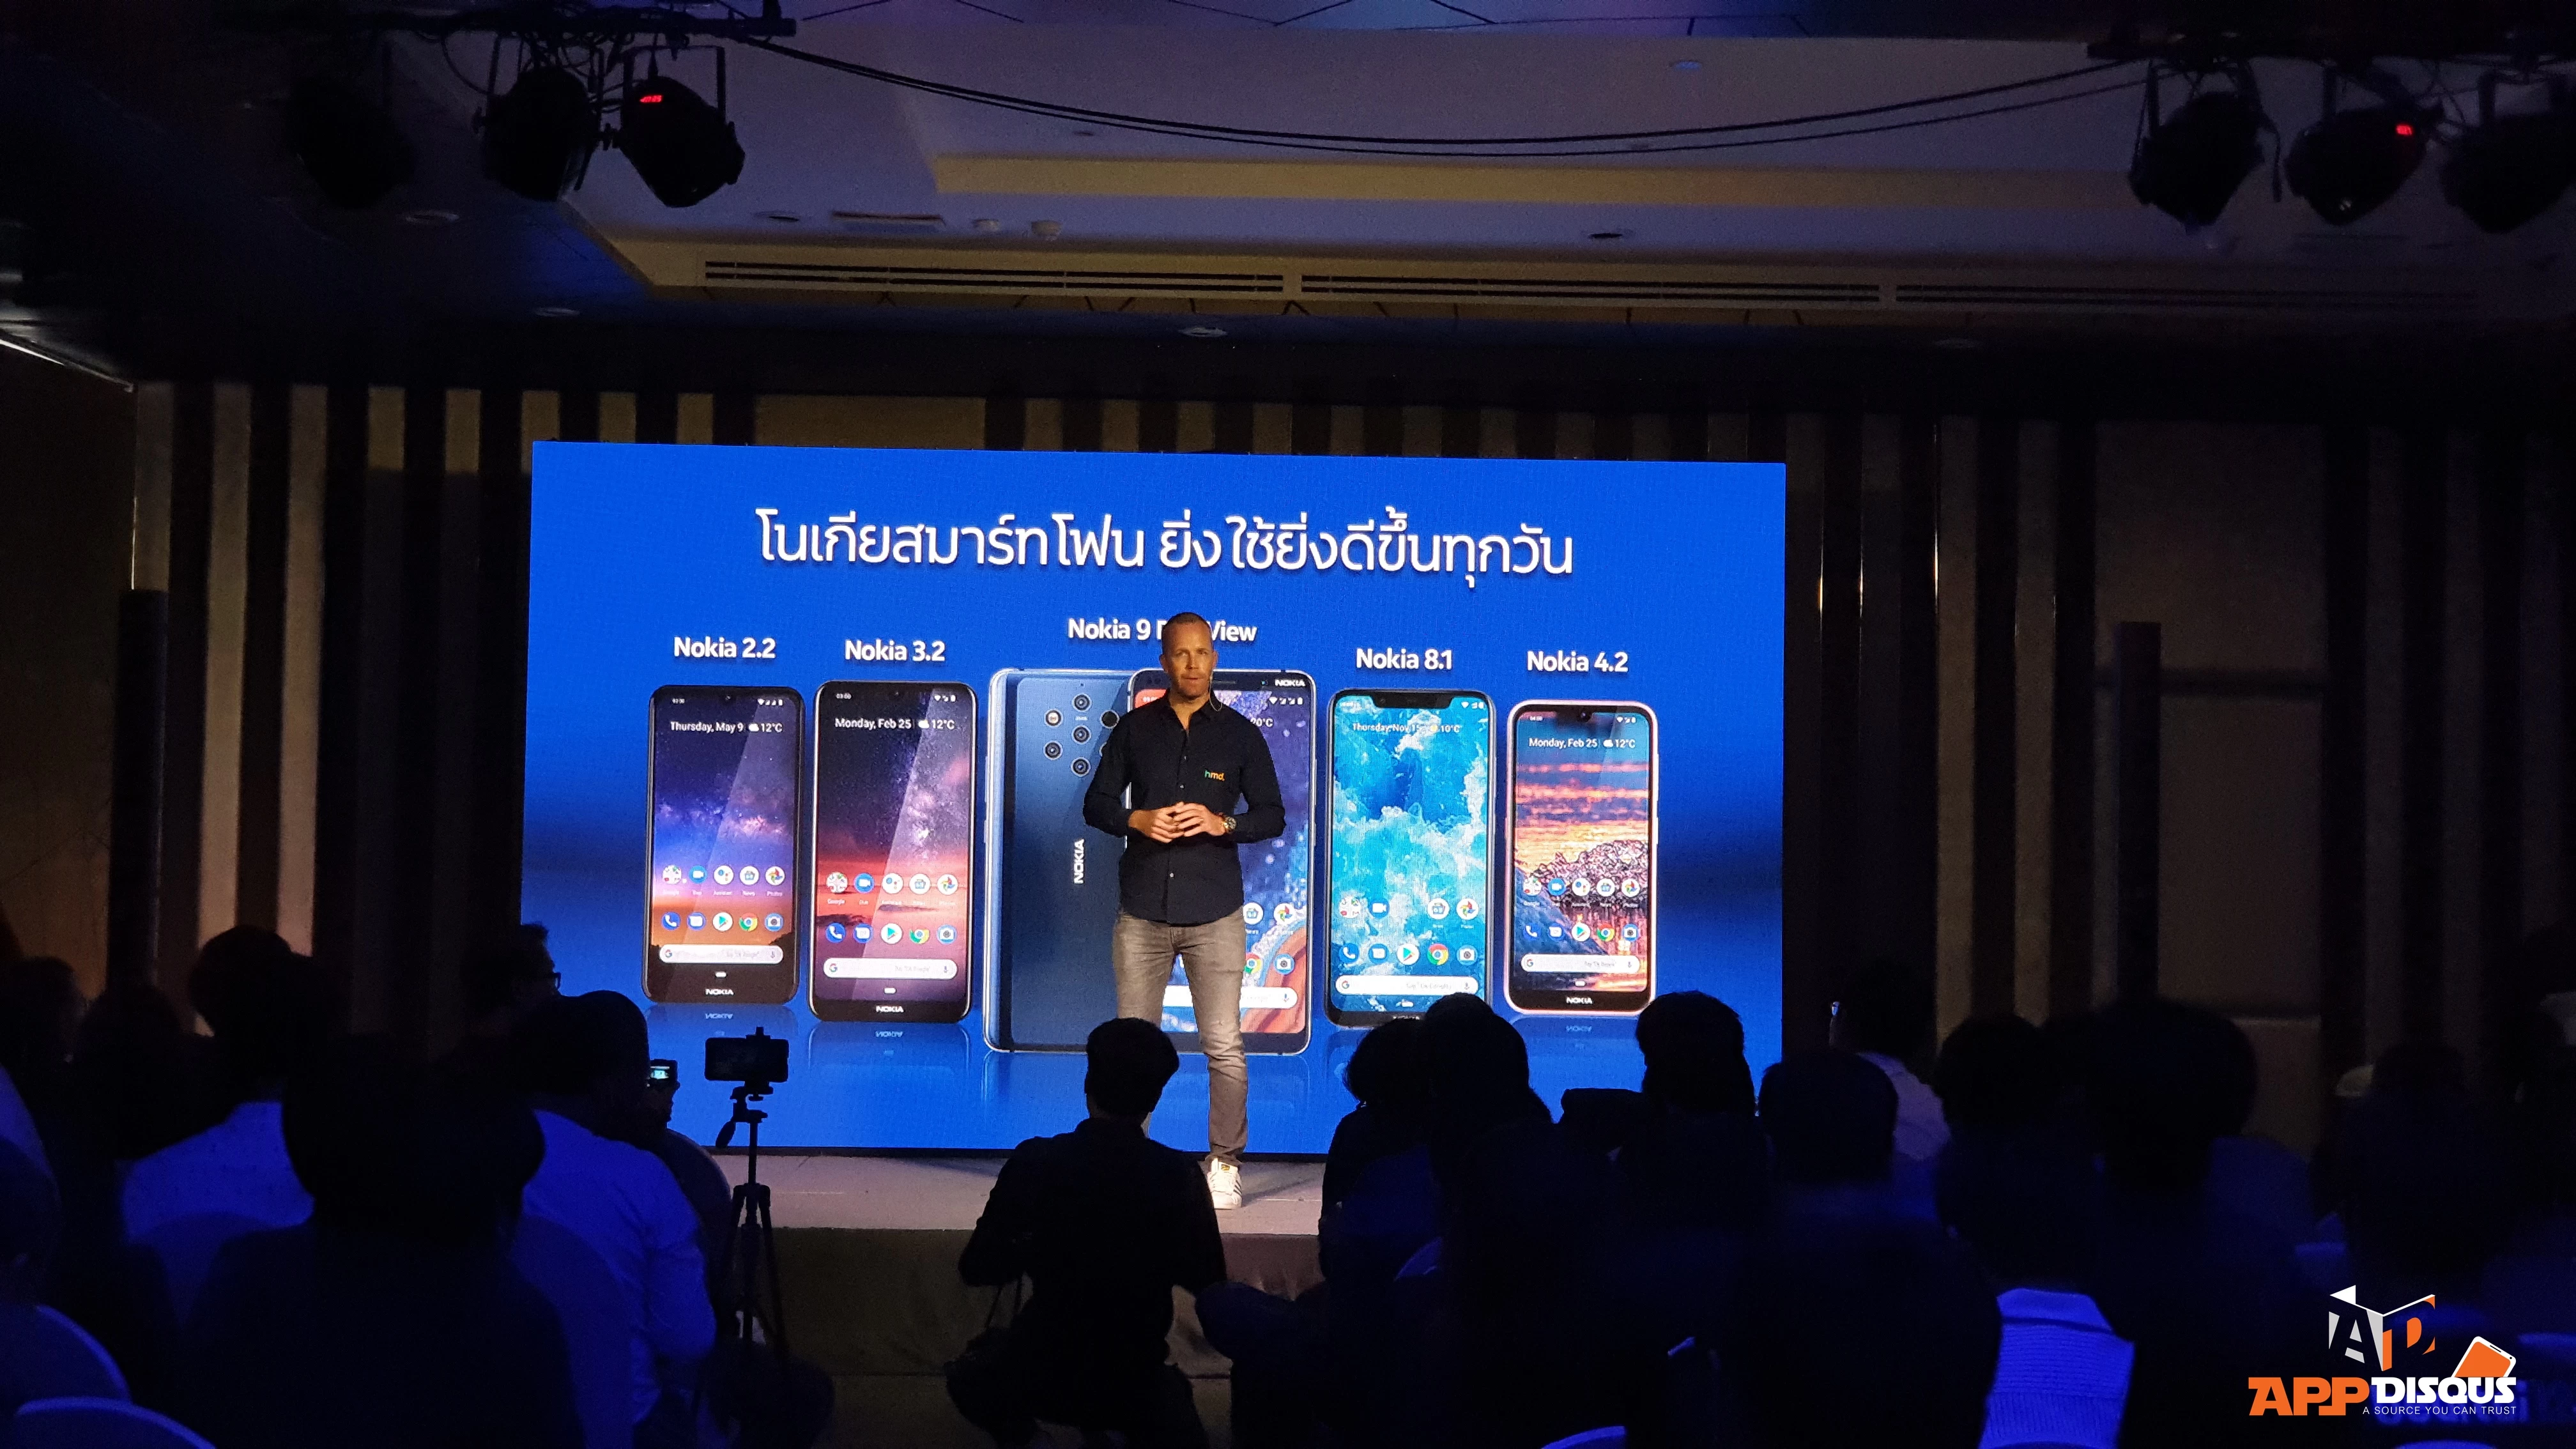 20190702 113115 | Nokia 9 Pureview | เปิดราคาขายพร้อมแจกโค้ดรับ Shopee coin สมาร์ทโฟนโนเกีย 9 PureView และสมาร์ทโฟน 4 รุ่นใหม่ล่าสุด